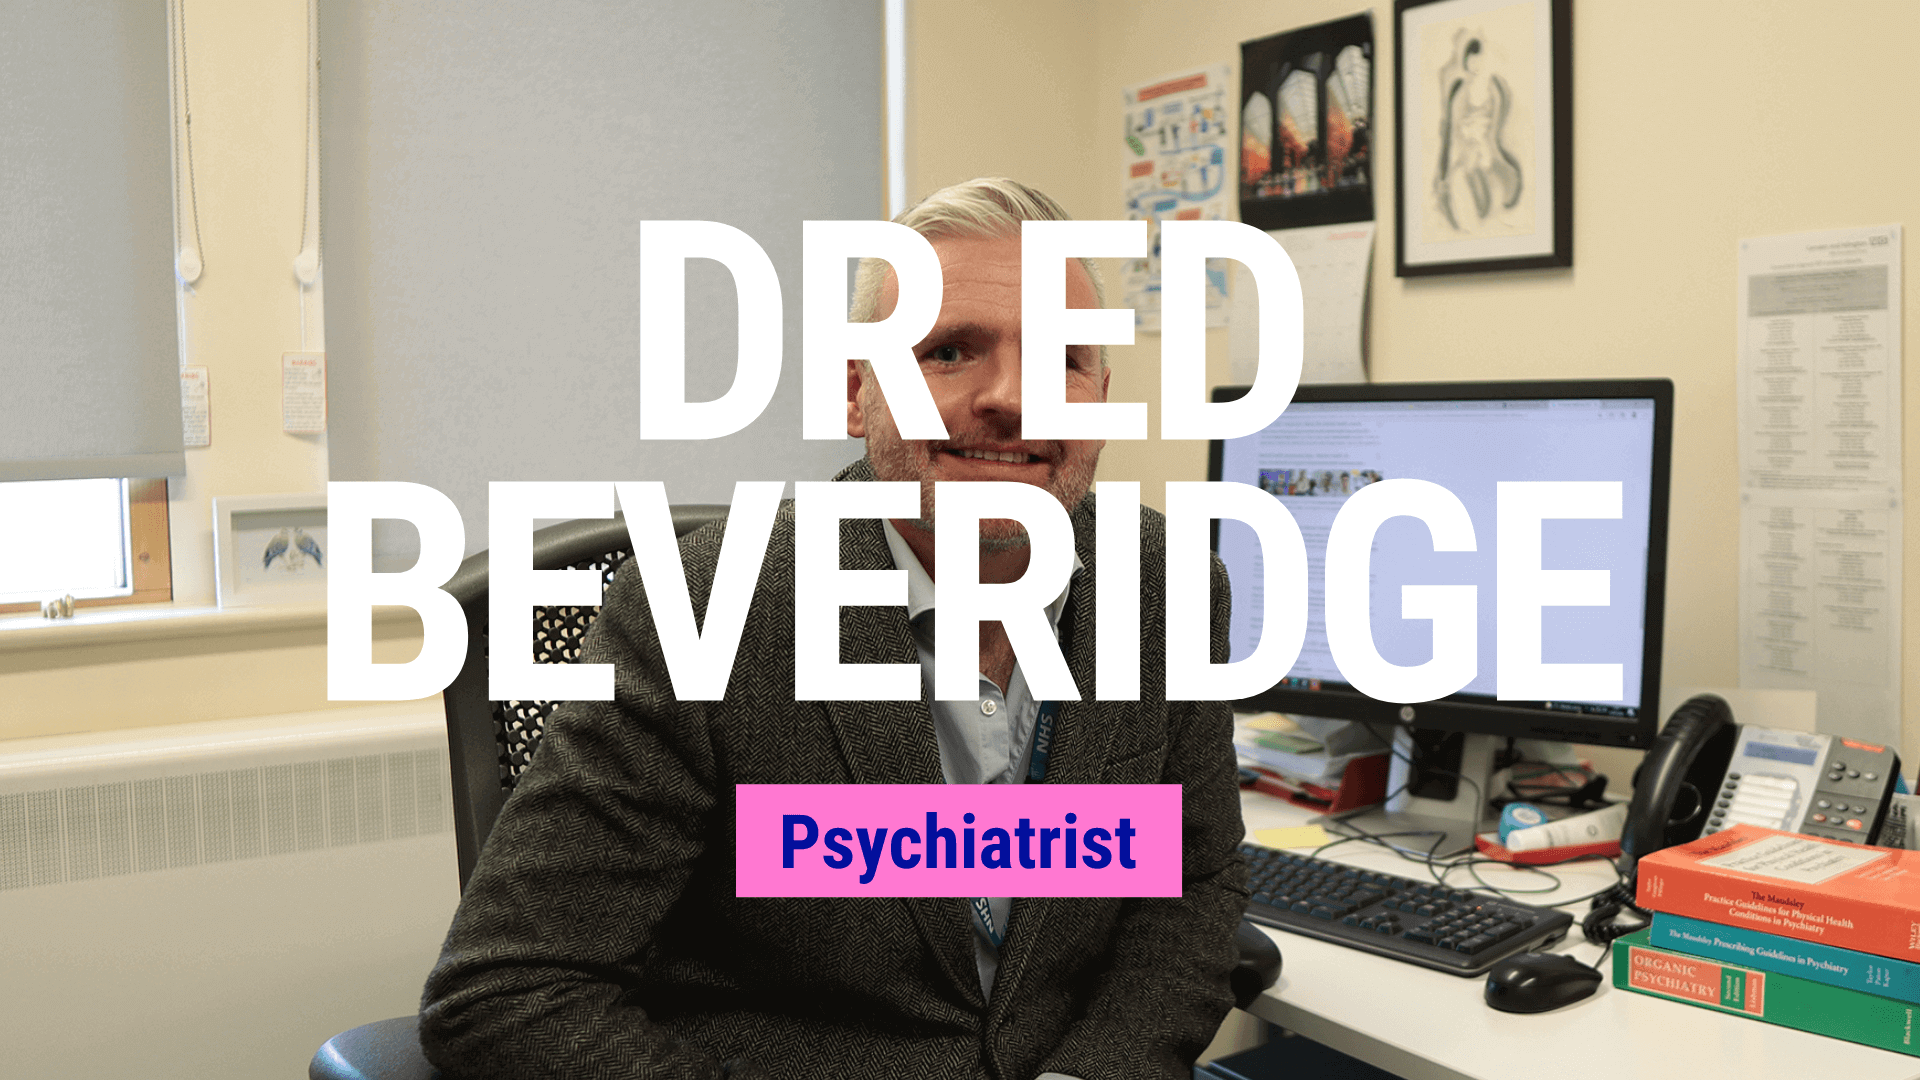 Psychiatrist, Dr Ed Beveridge